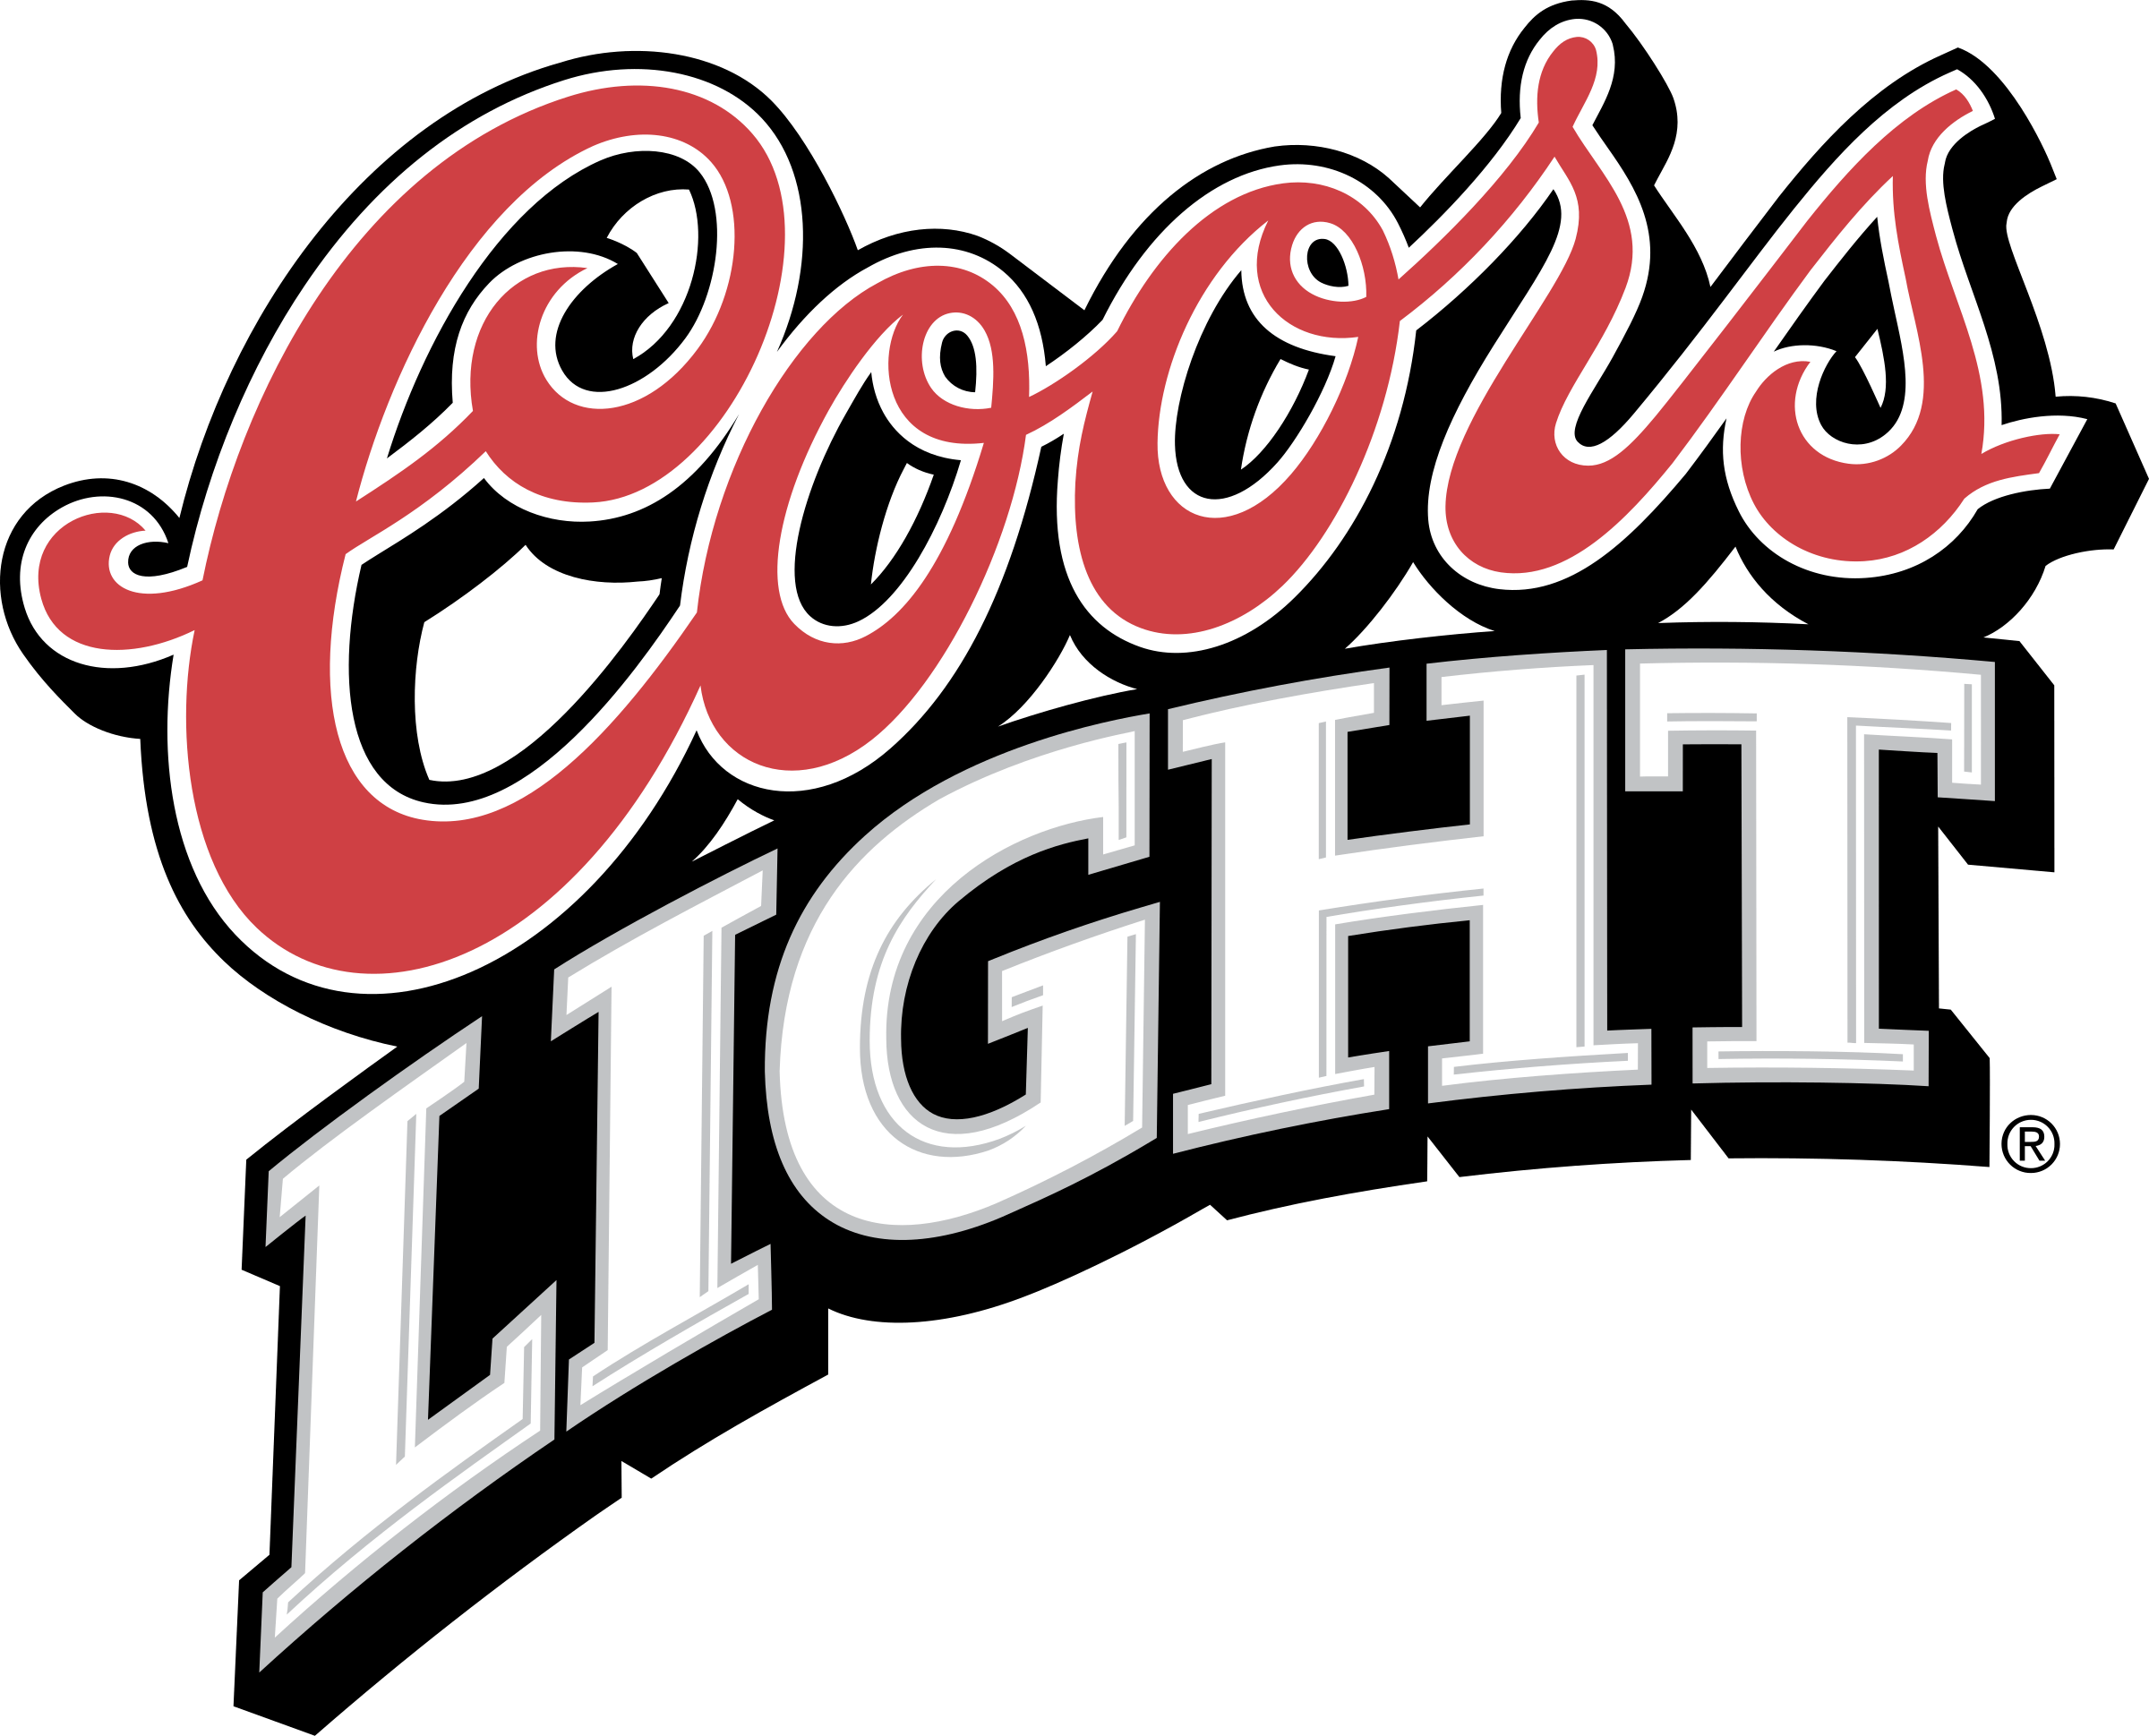 Coors Logo - Coors Light Logo PNG Transparent & SVG Vector - Freebie Supply